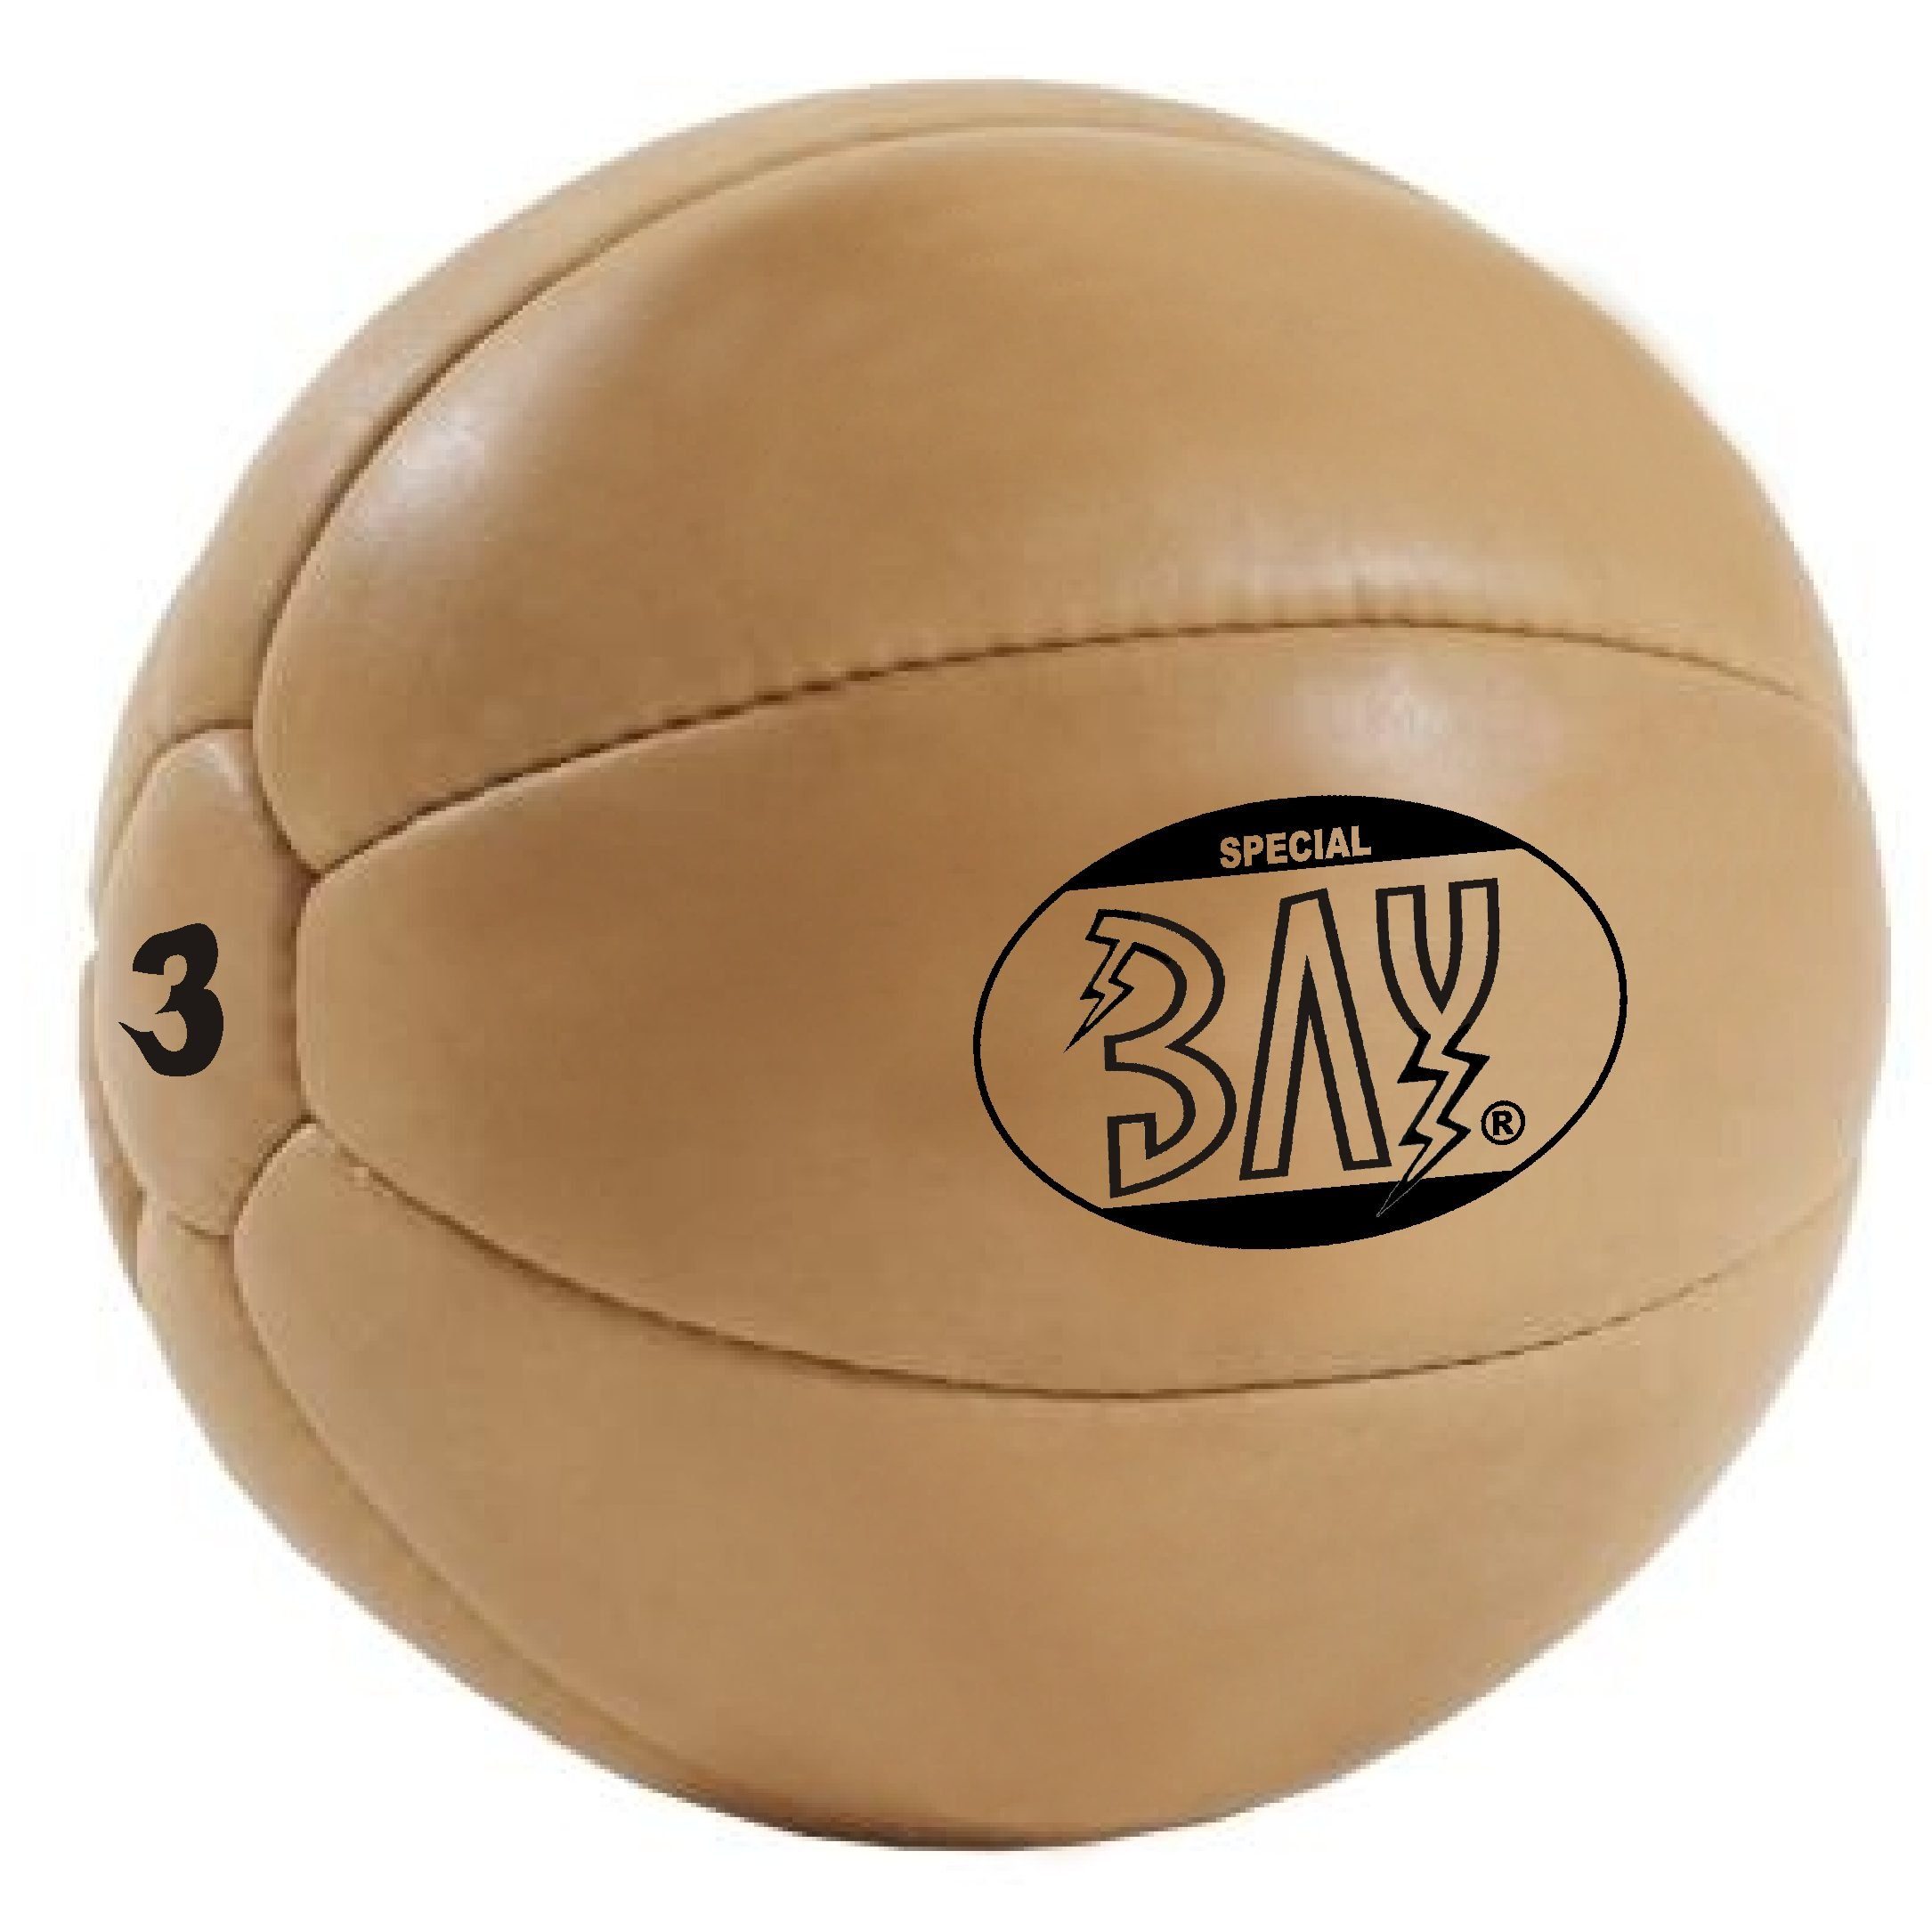 BAY-Sports Medizinball 3 braun 3kg Trainingsball Ausführung Vollball Kunstleder Kraftball, kg natur Kraftsport Profi Fitnessball klassische